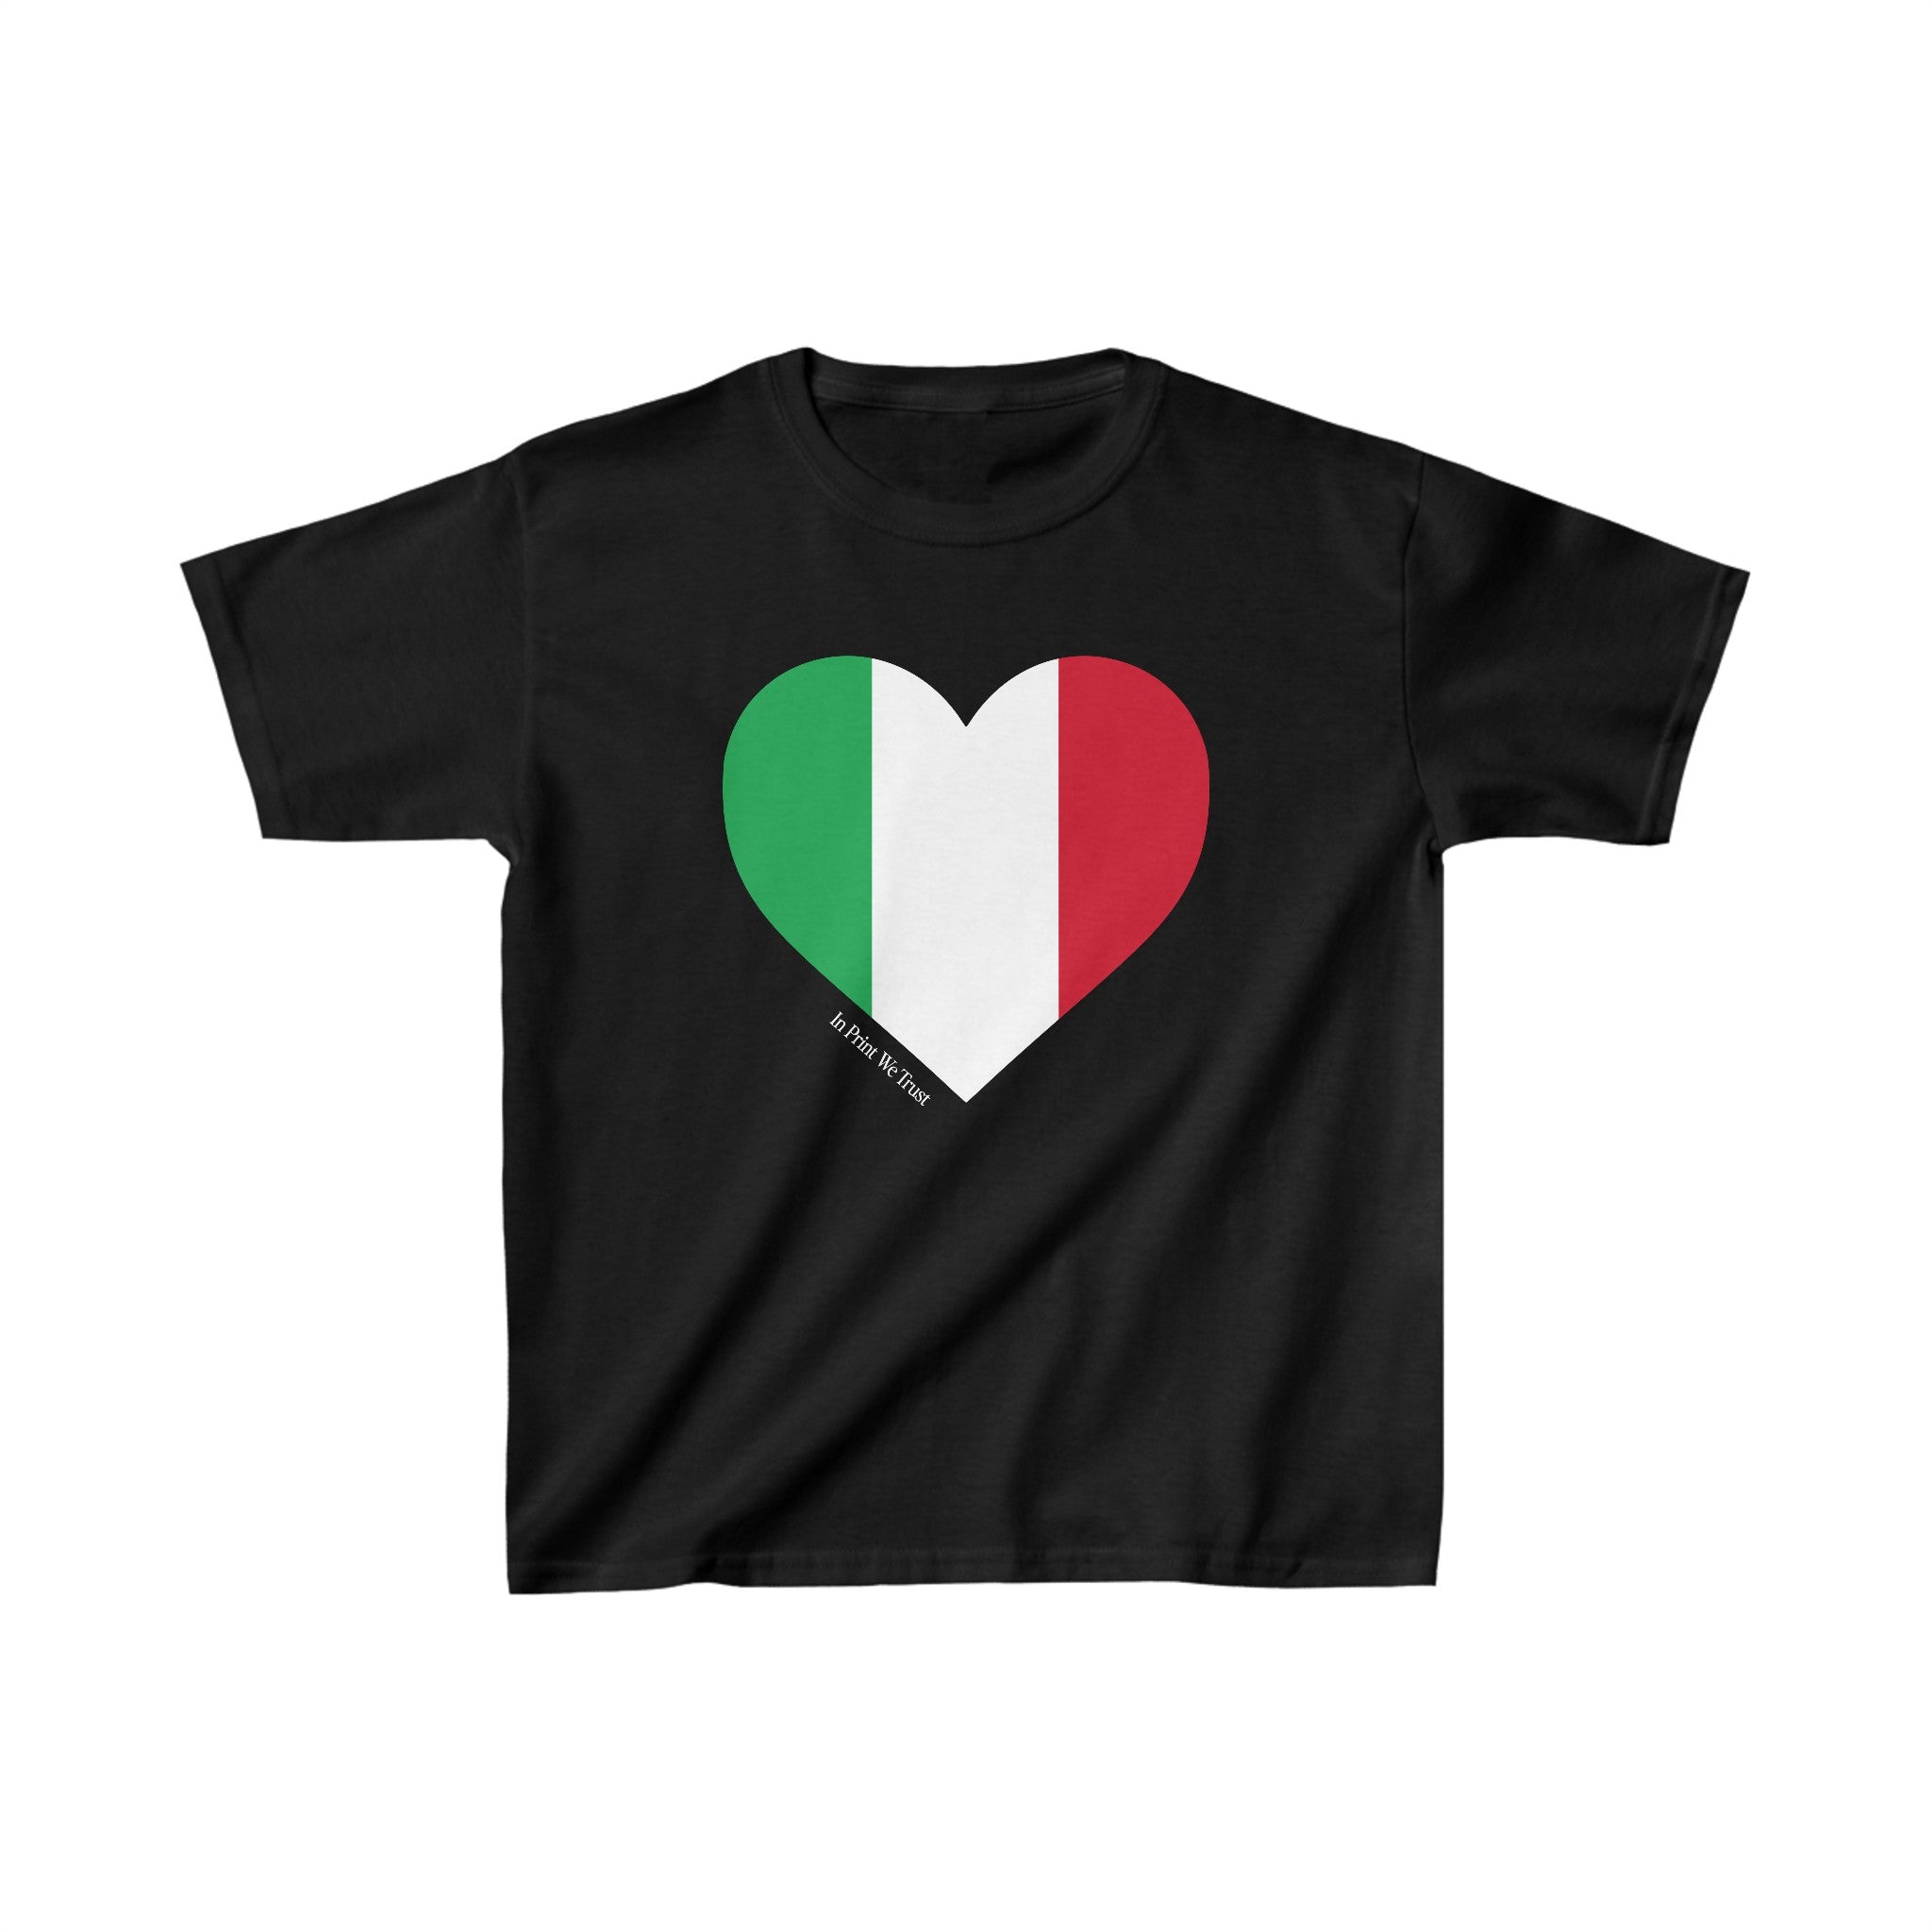 'Italy' baby tee - In Print We Trust